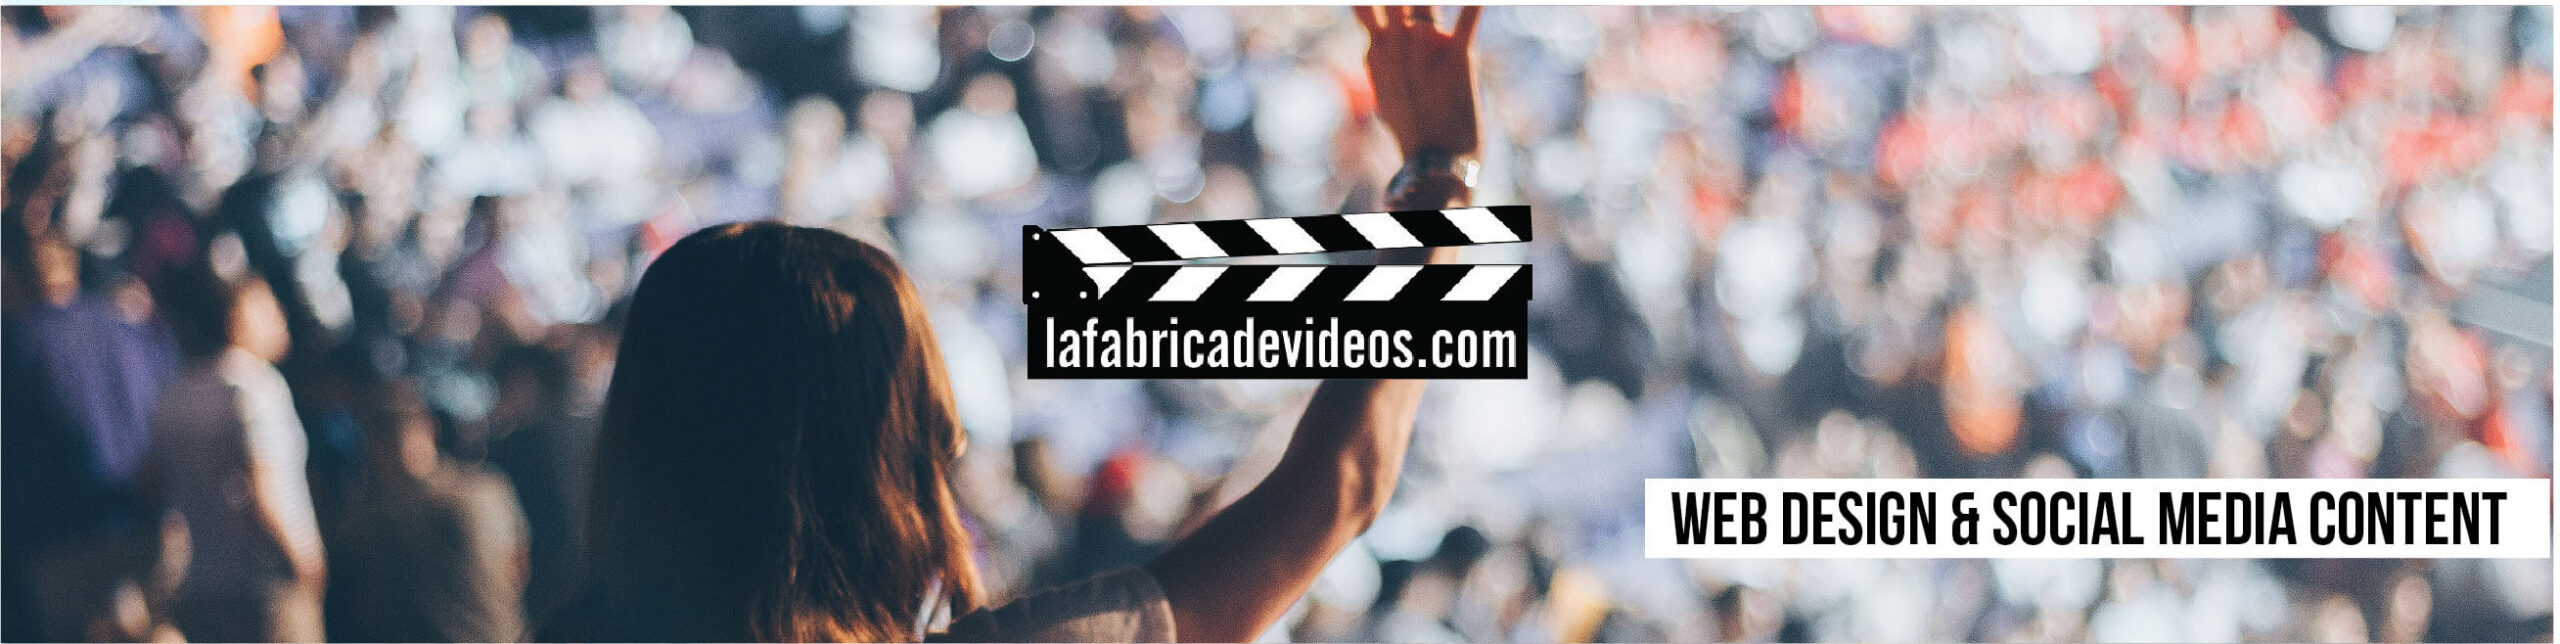 Organizations-web-design-lafabricadevideos